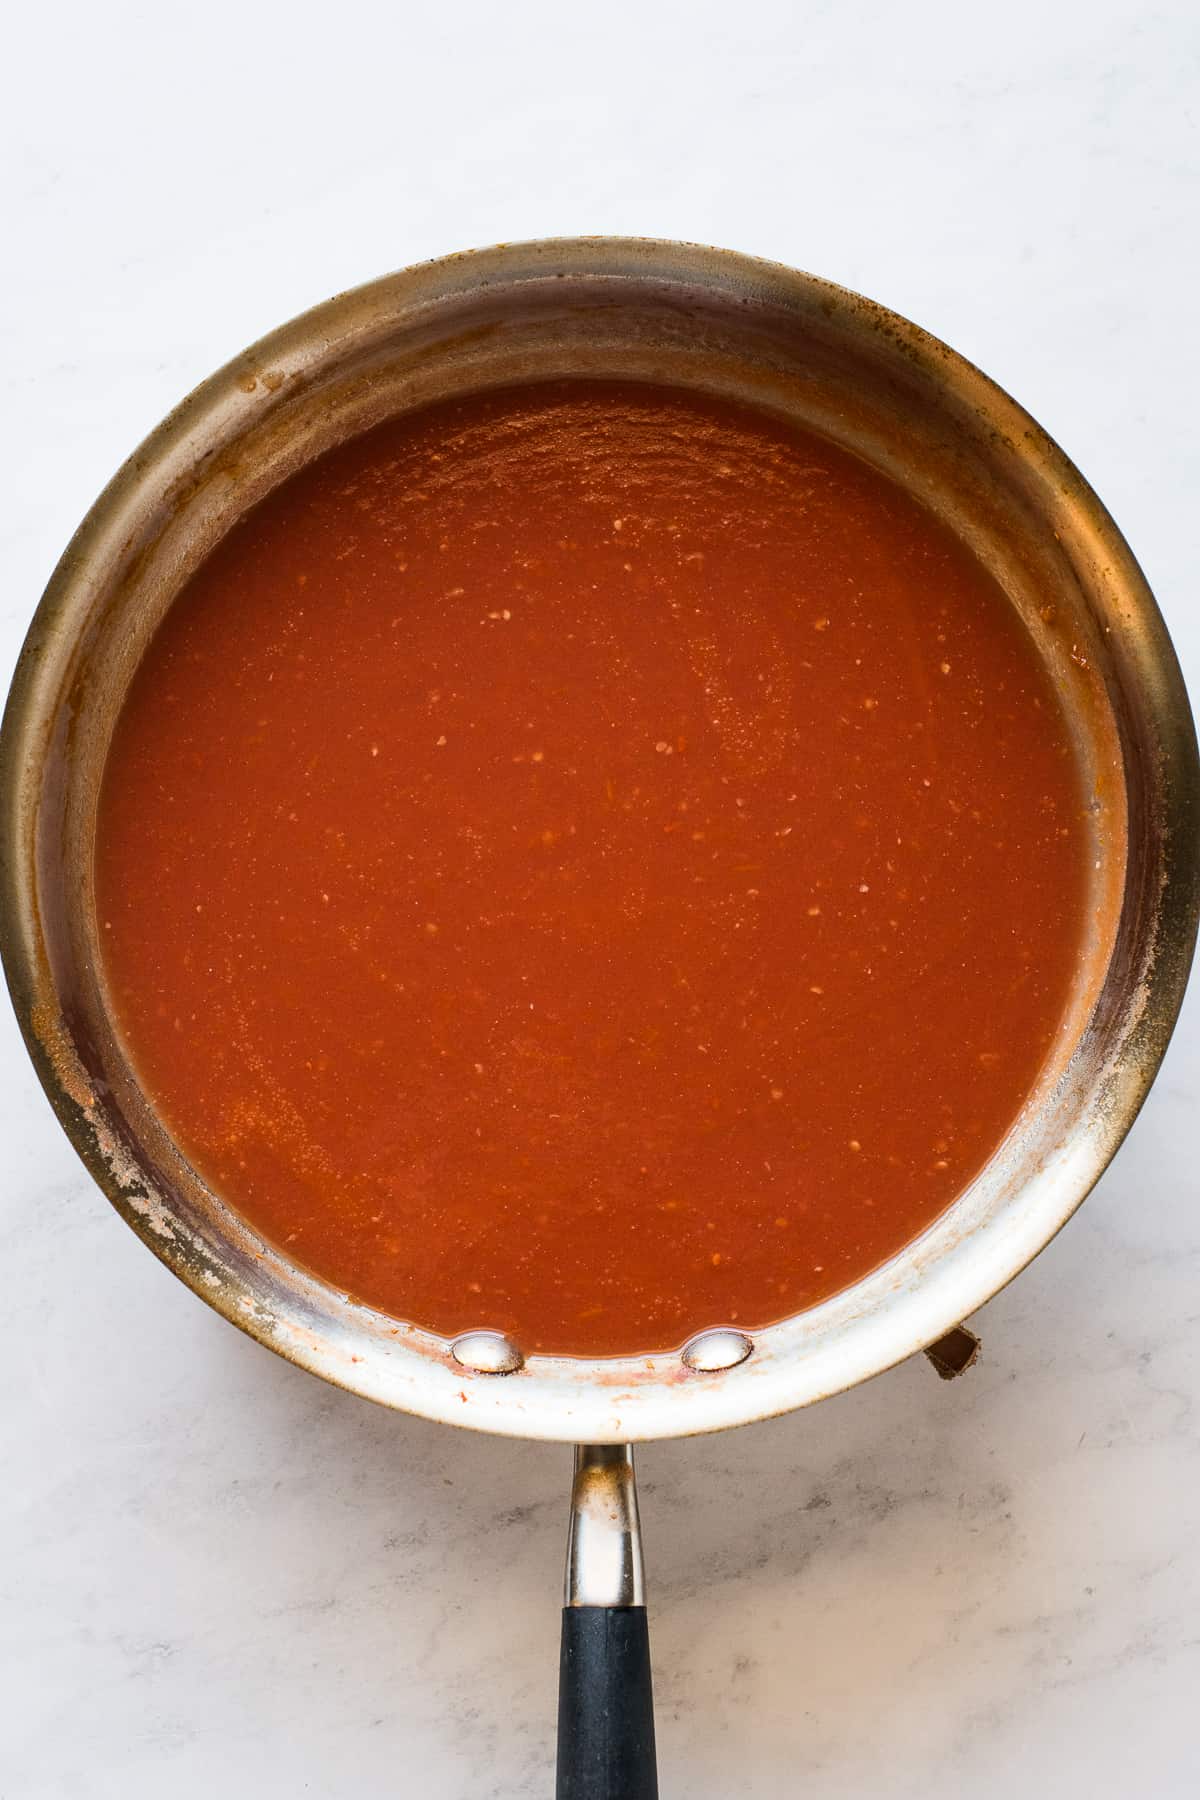 The tomato-based sauce for entomatadas in a skillet.